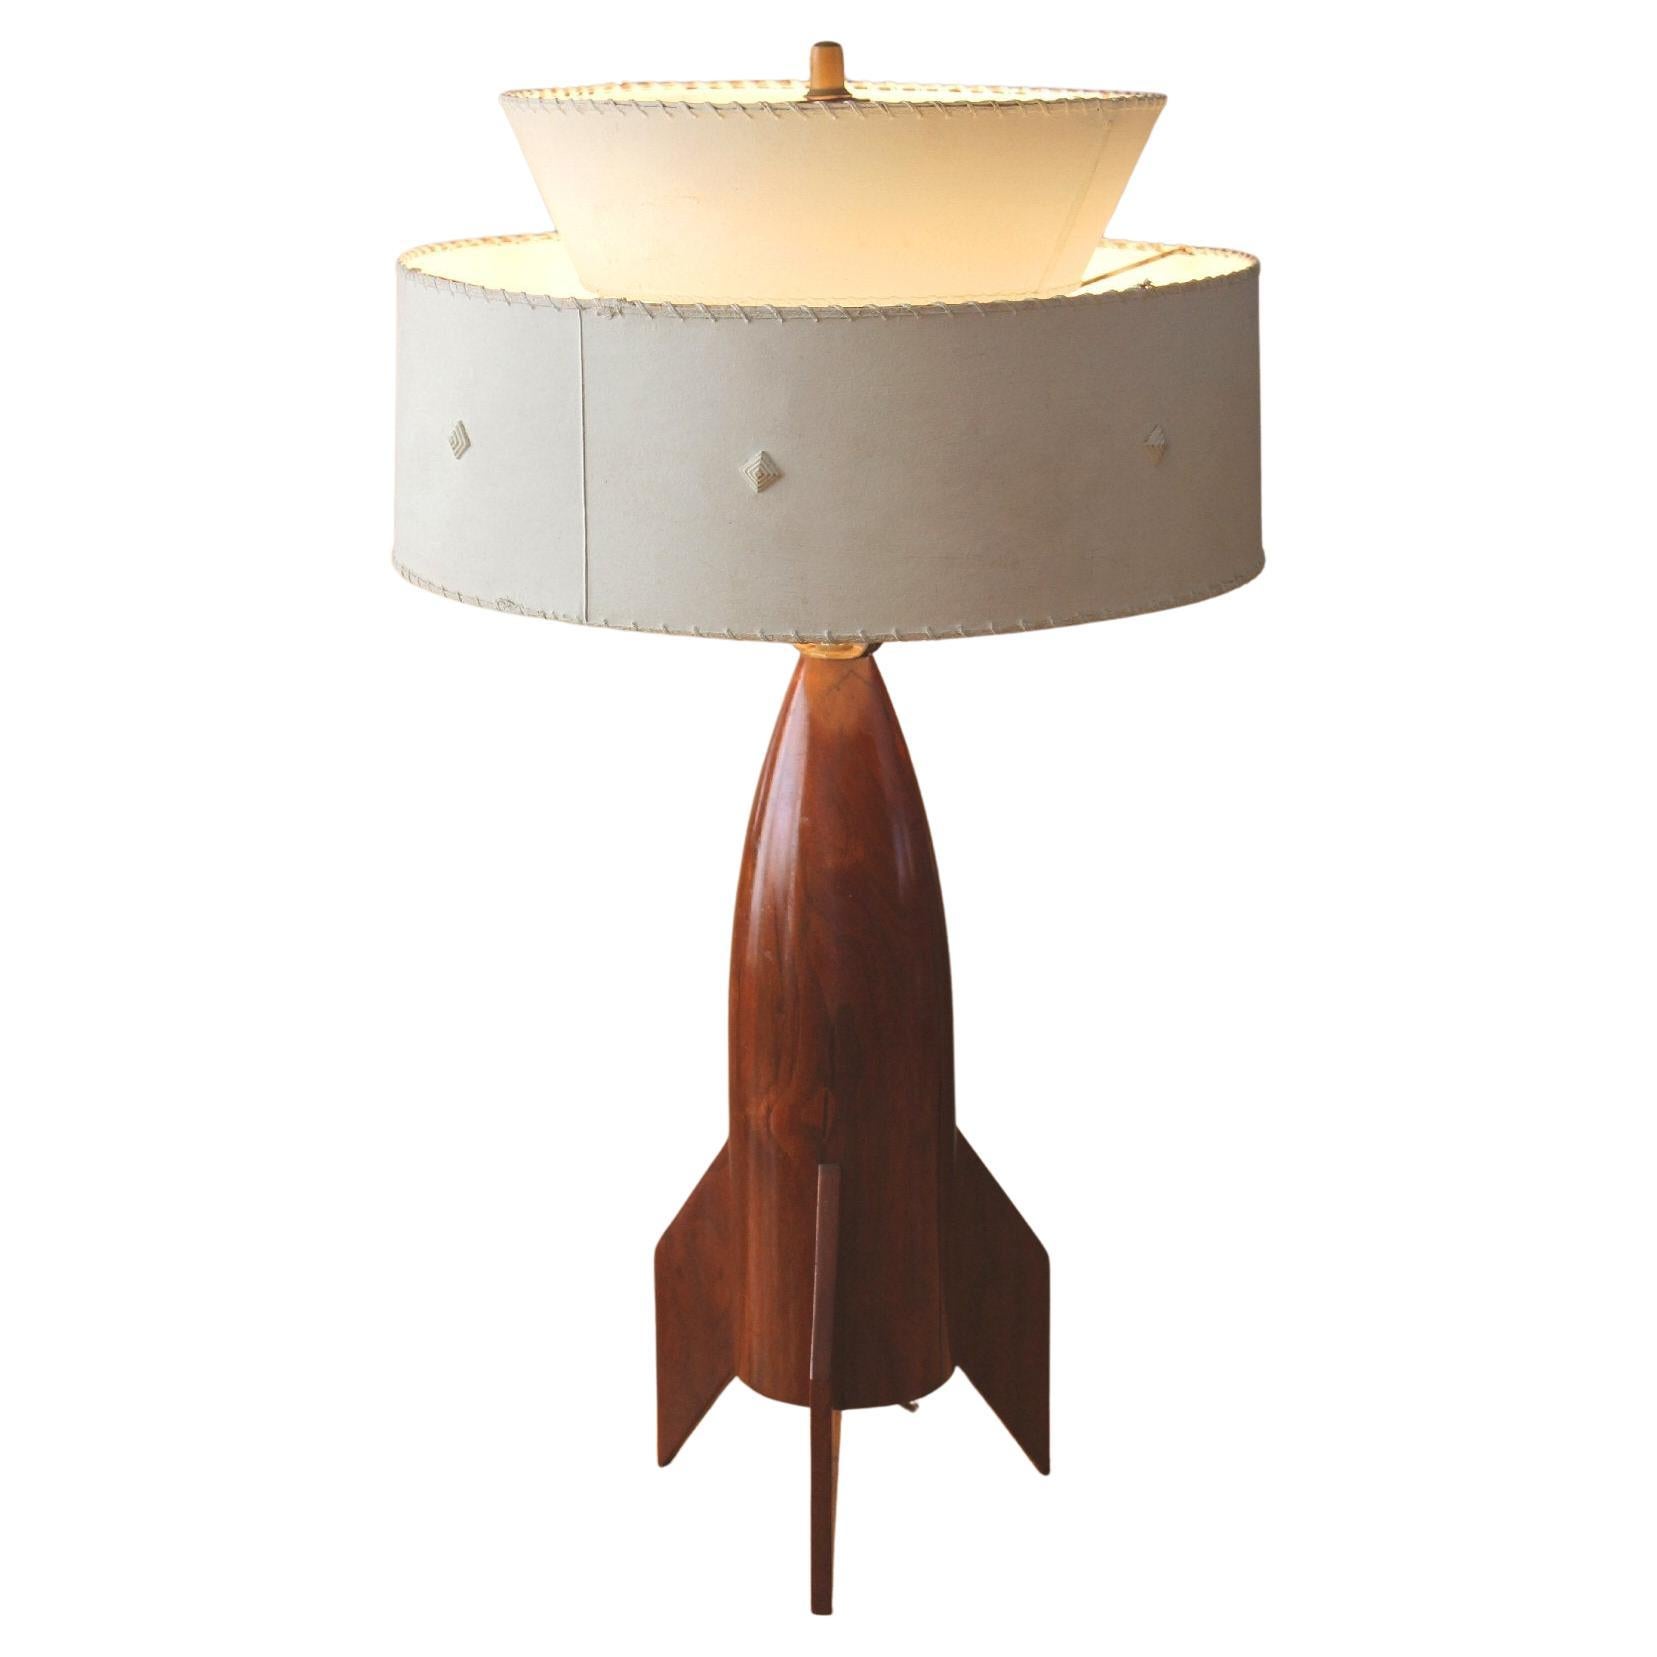 Epic Mid Century Modern Rocket Table Lamp! Mahogany Fiberglass Sputnik Era Icon!